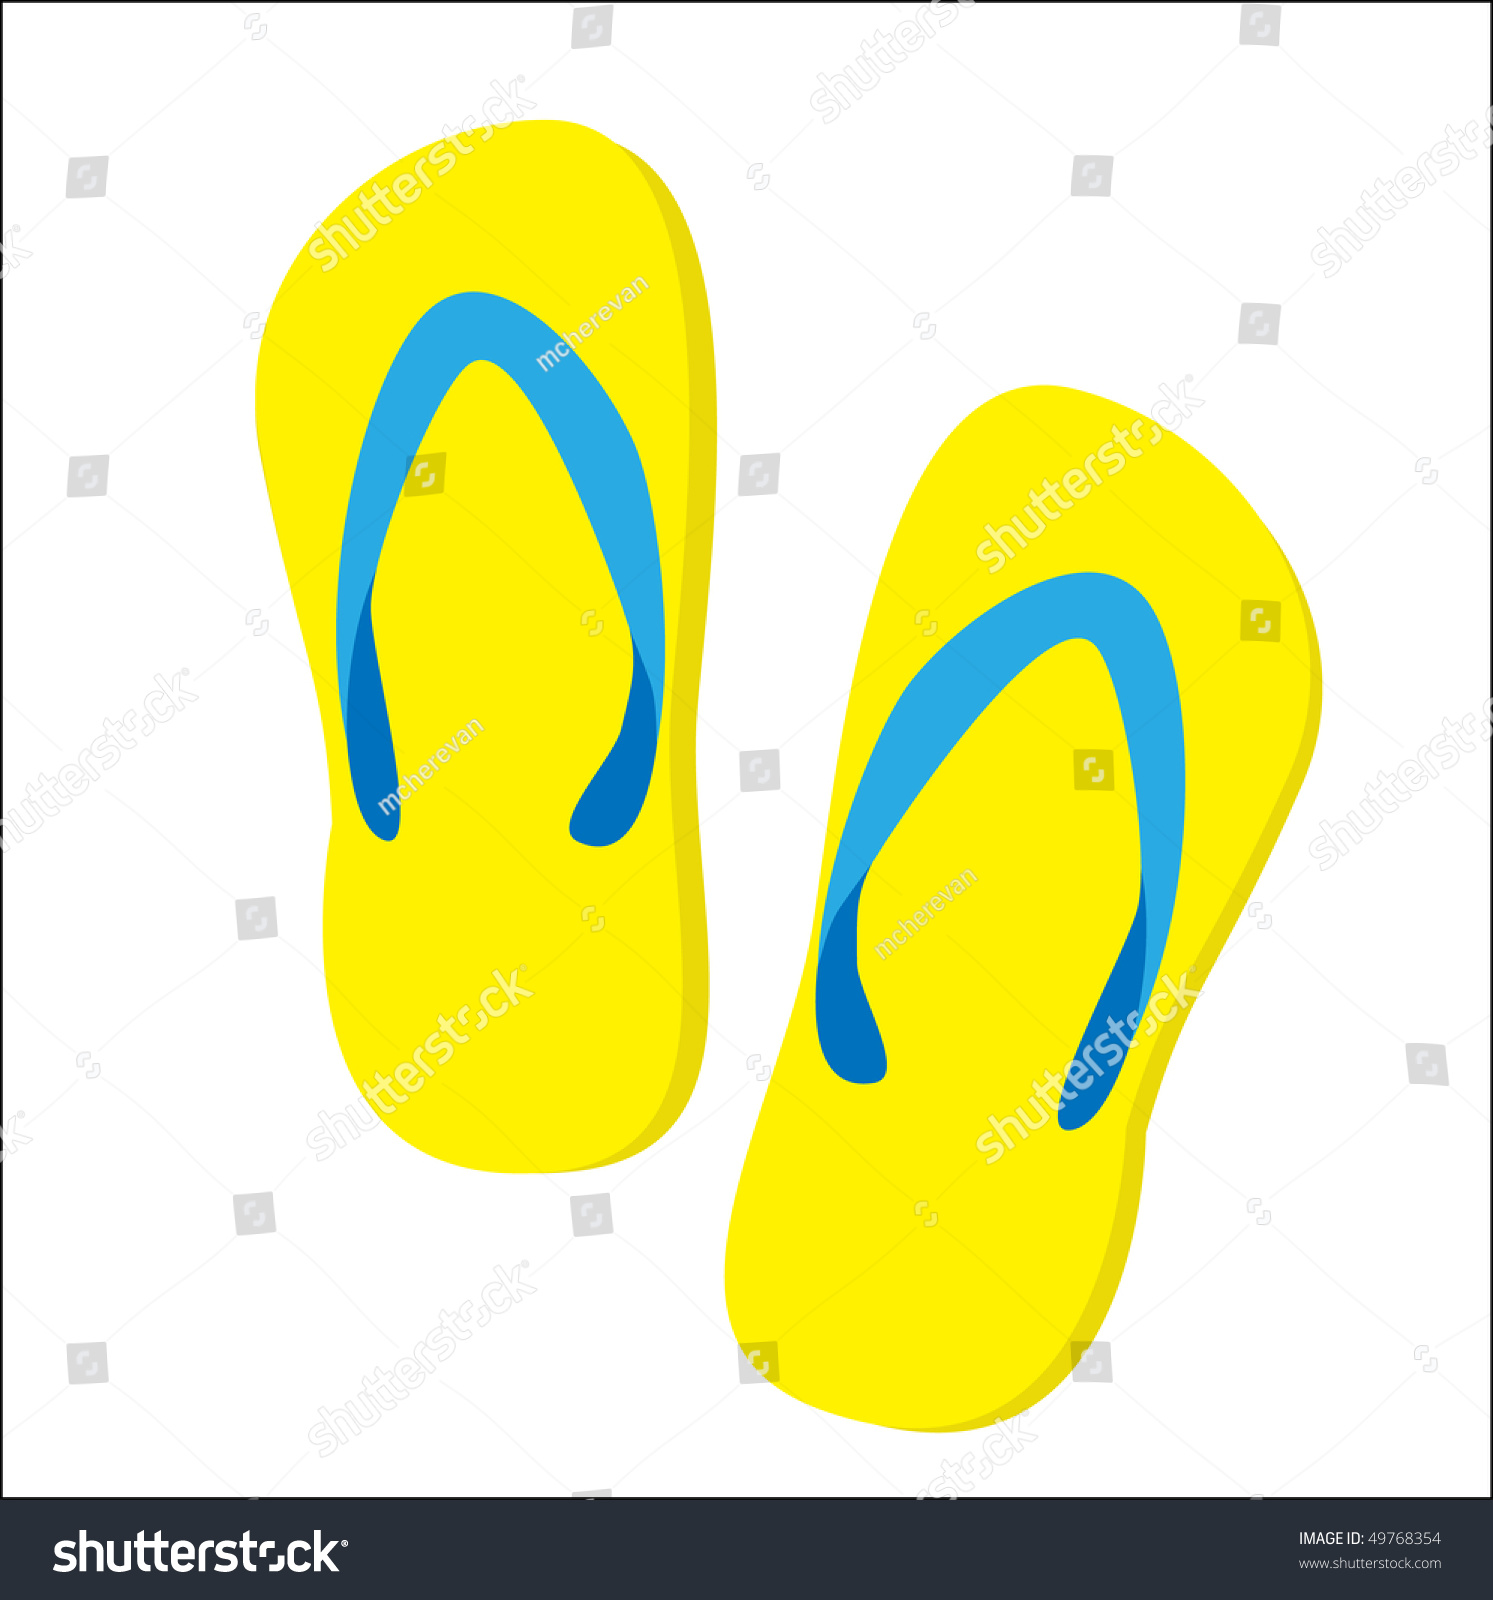 Slippers Isolated On White Background. Vector. - 49768354 : Shutterstock